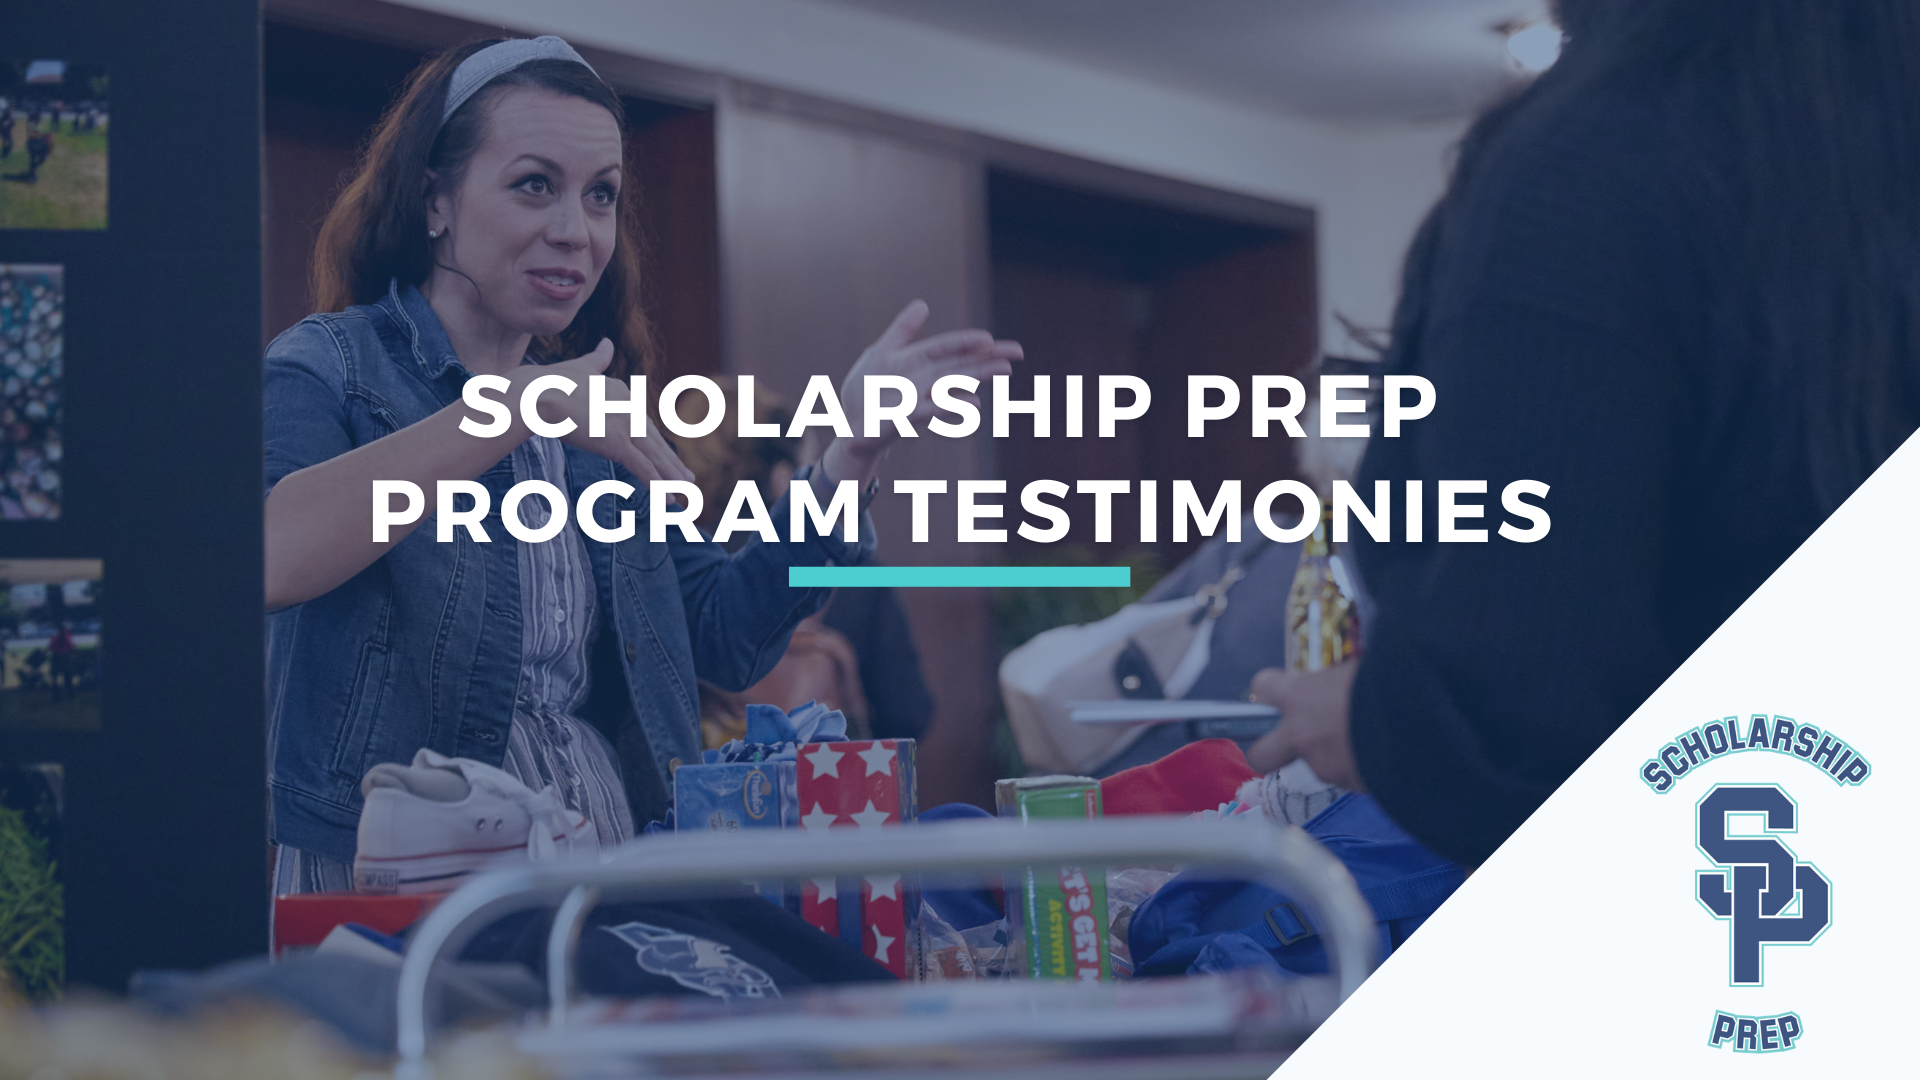 [Video] - Scholarship Prep Program Testimonies